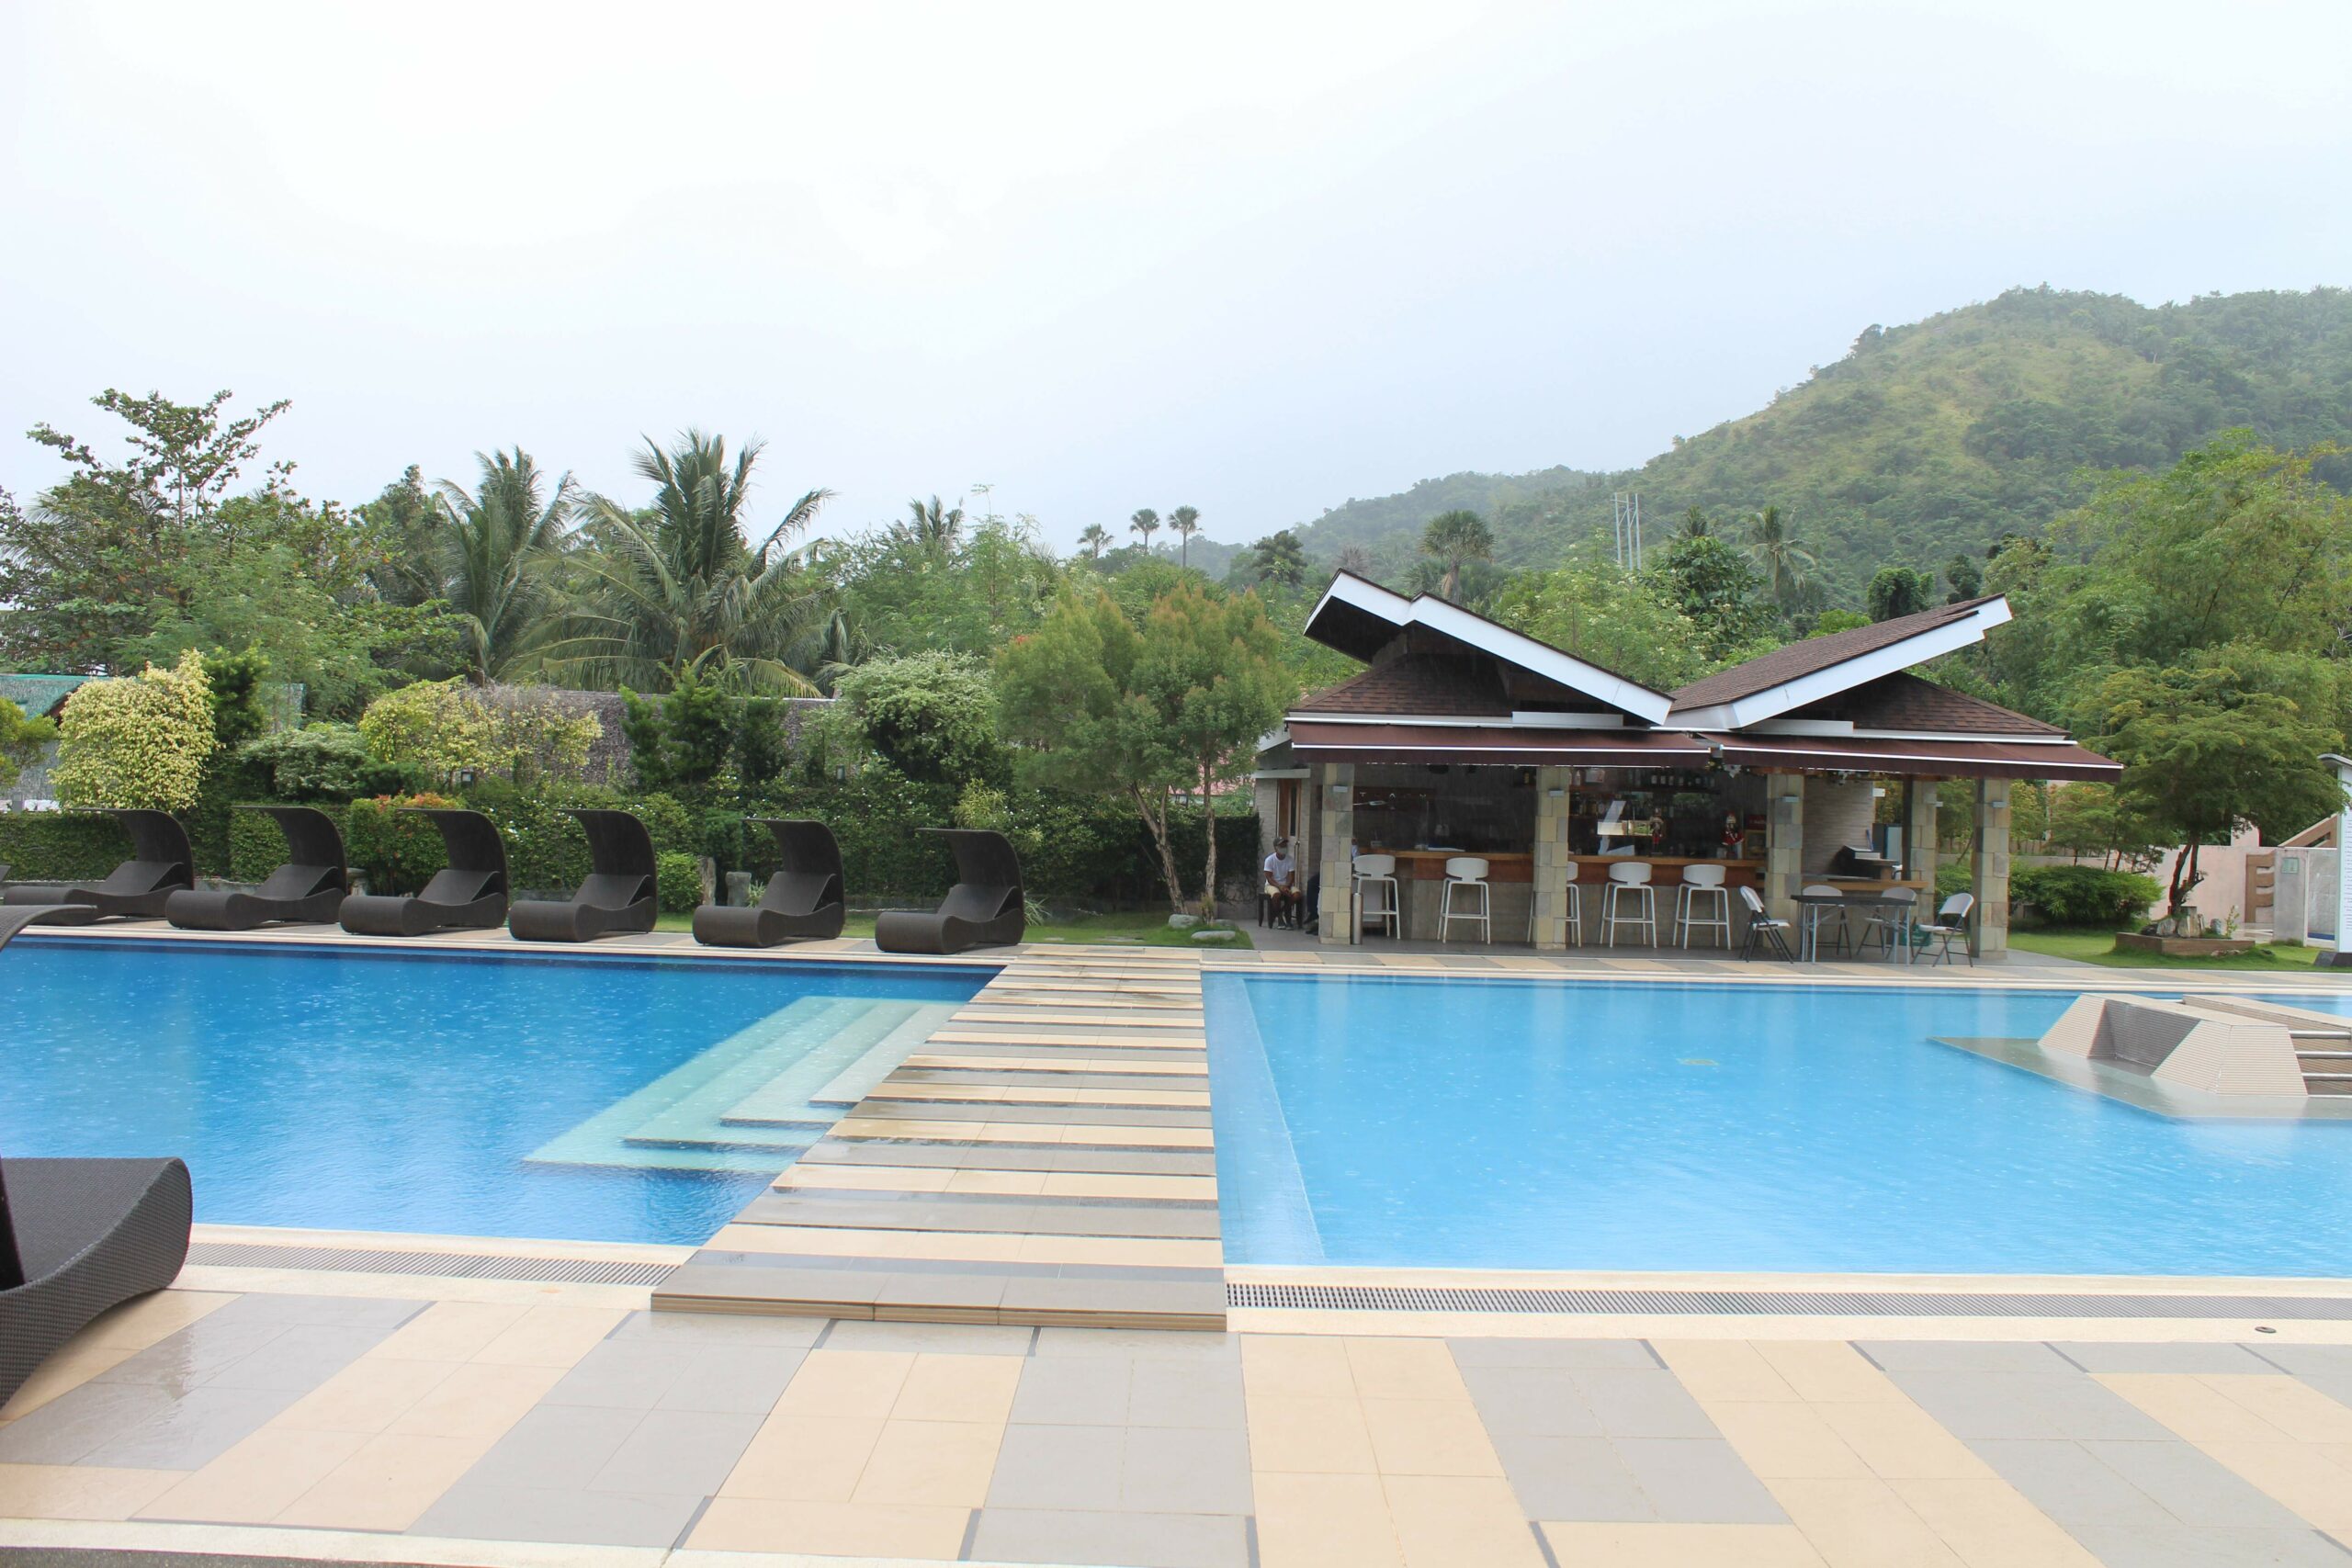 Infinity Resort and Spa in Puerto Galera - infinity pool divisions